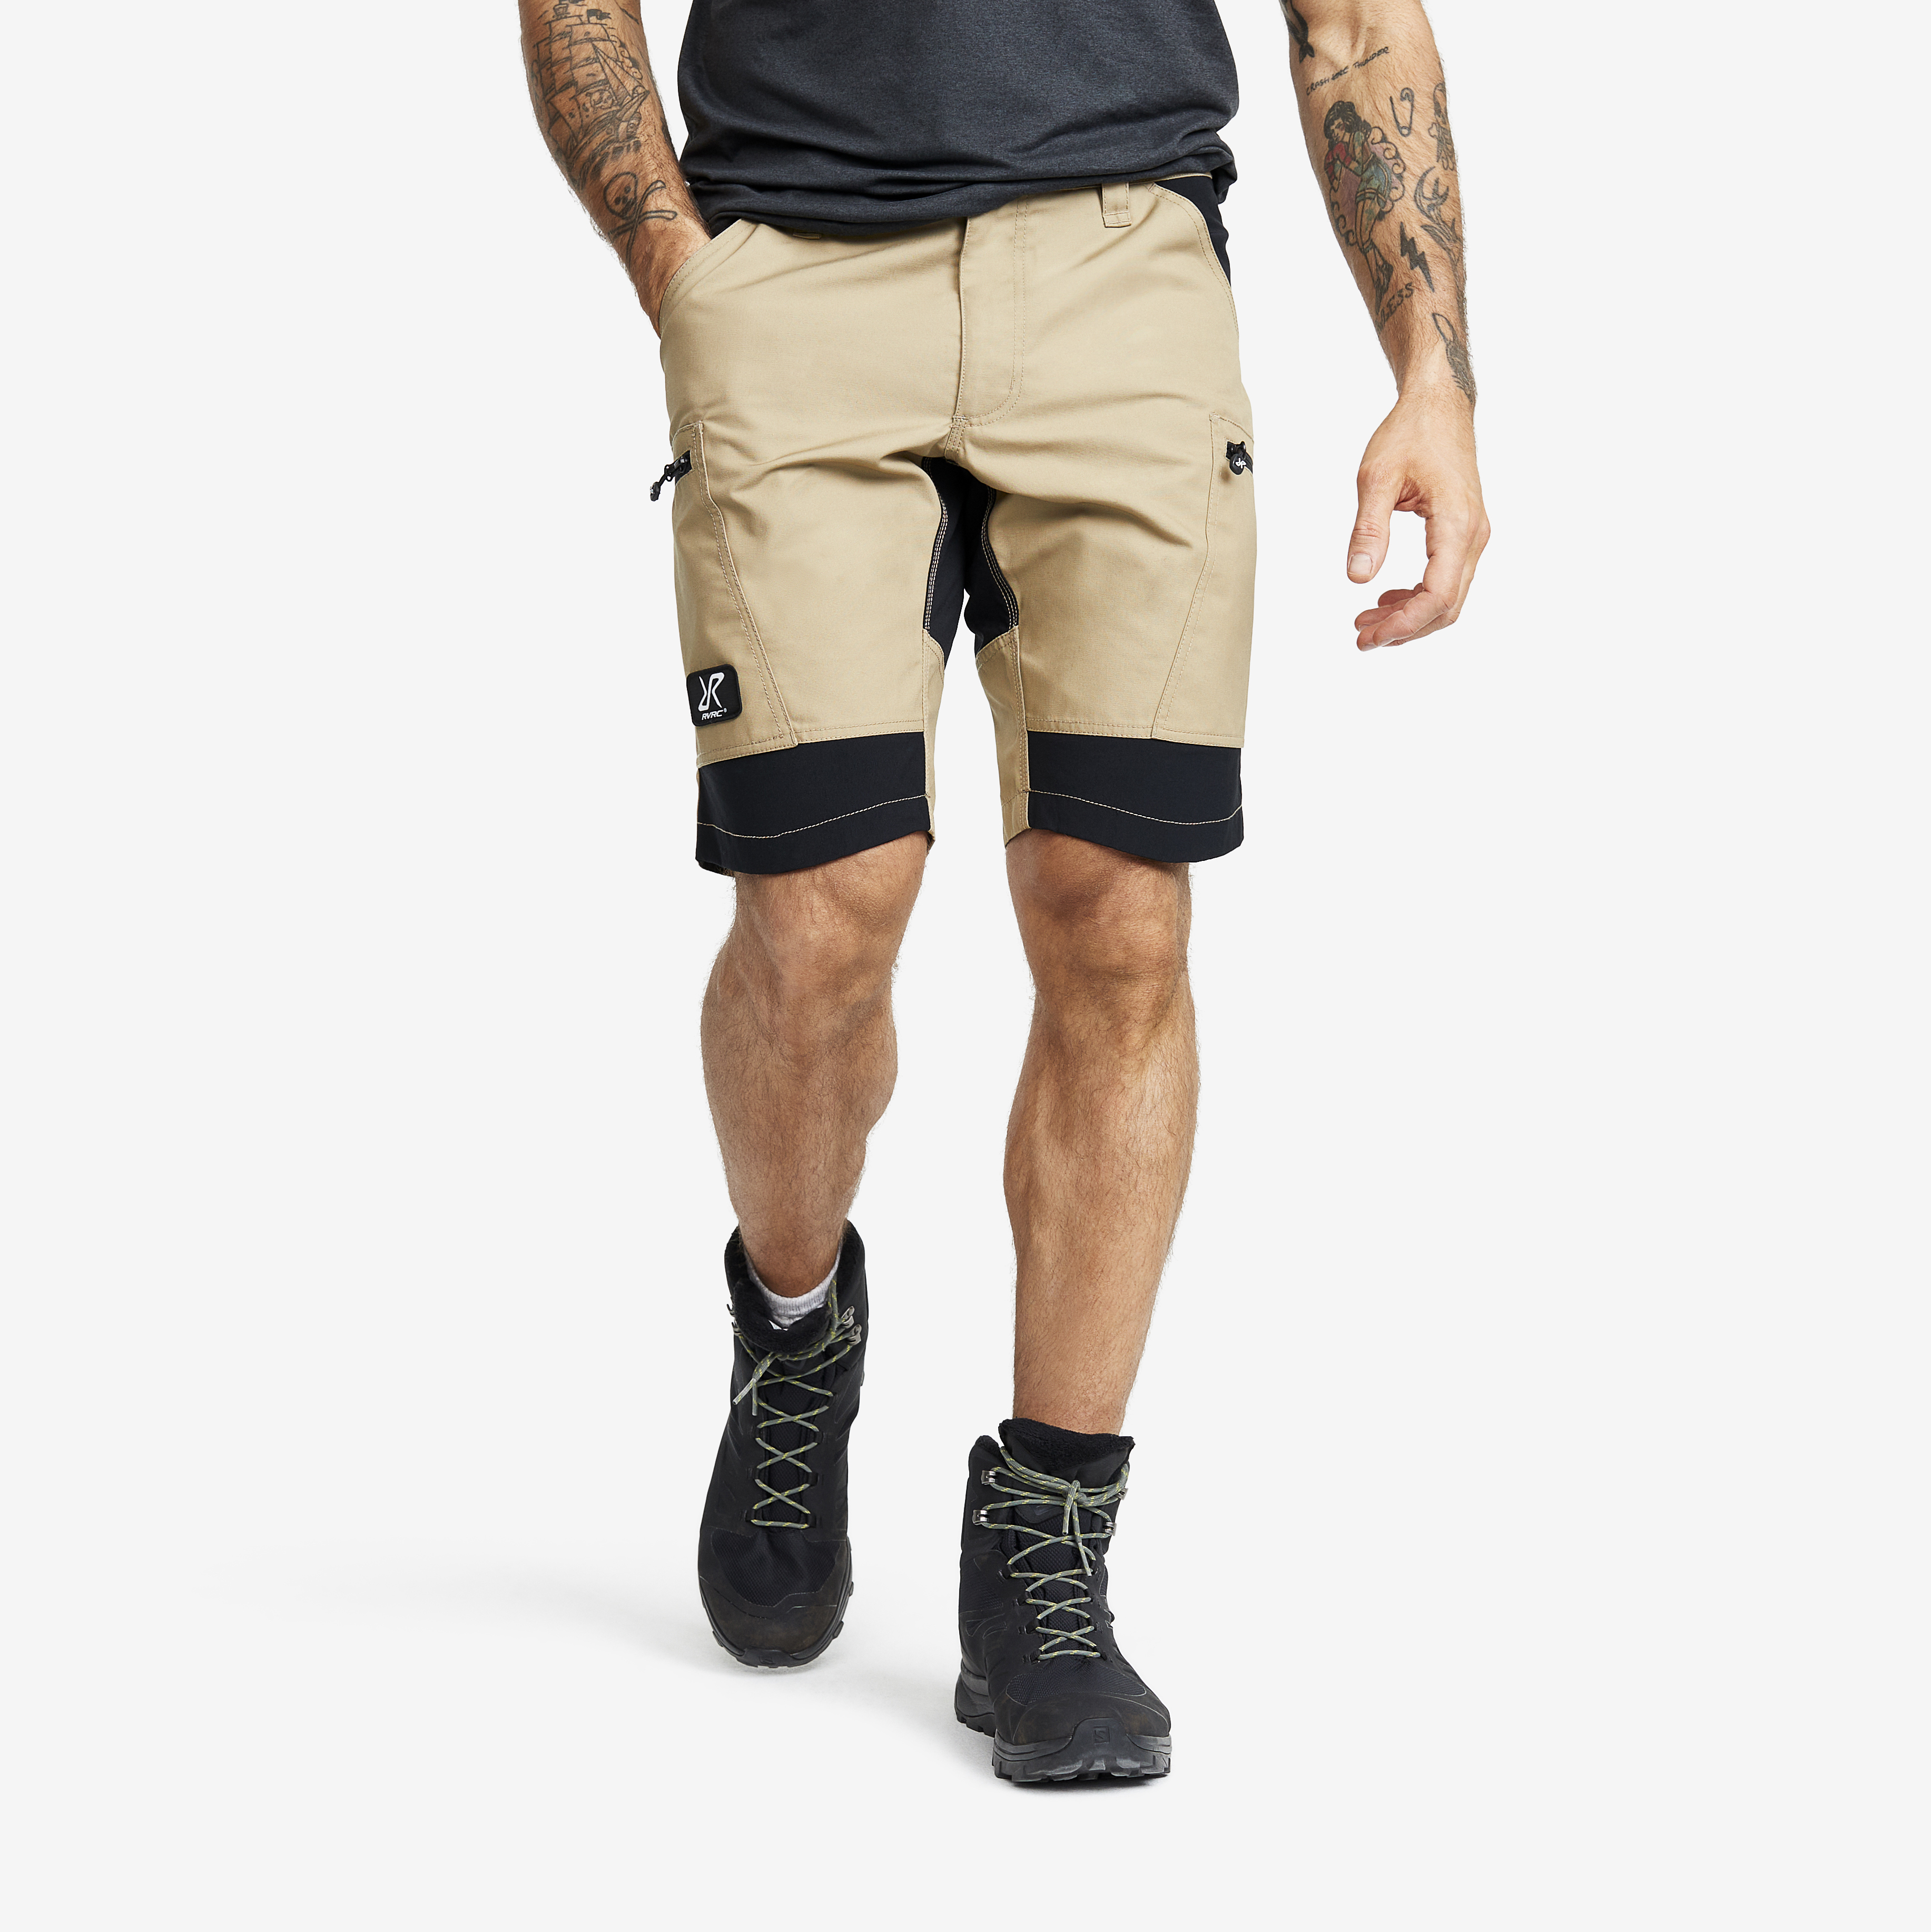 Nordwand Shorts - Herr - Khaki, Storlek:XL - Byxor > Shorts